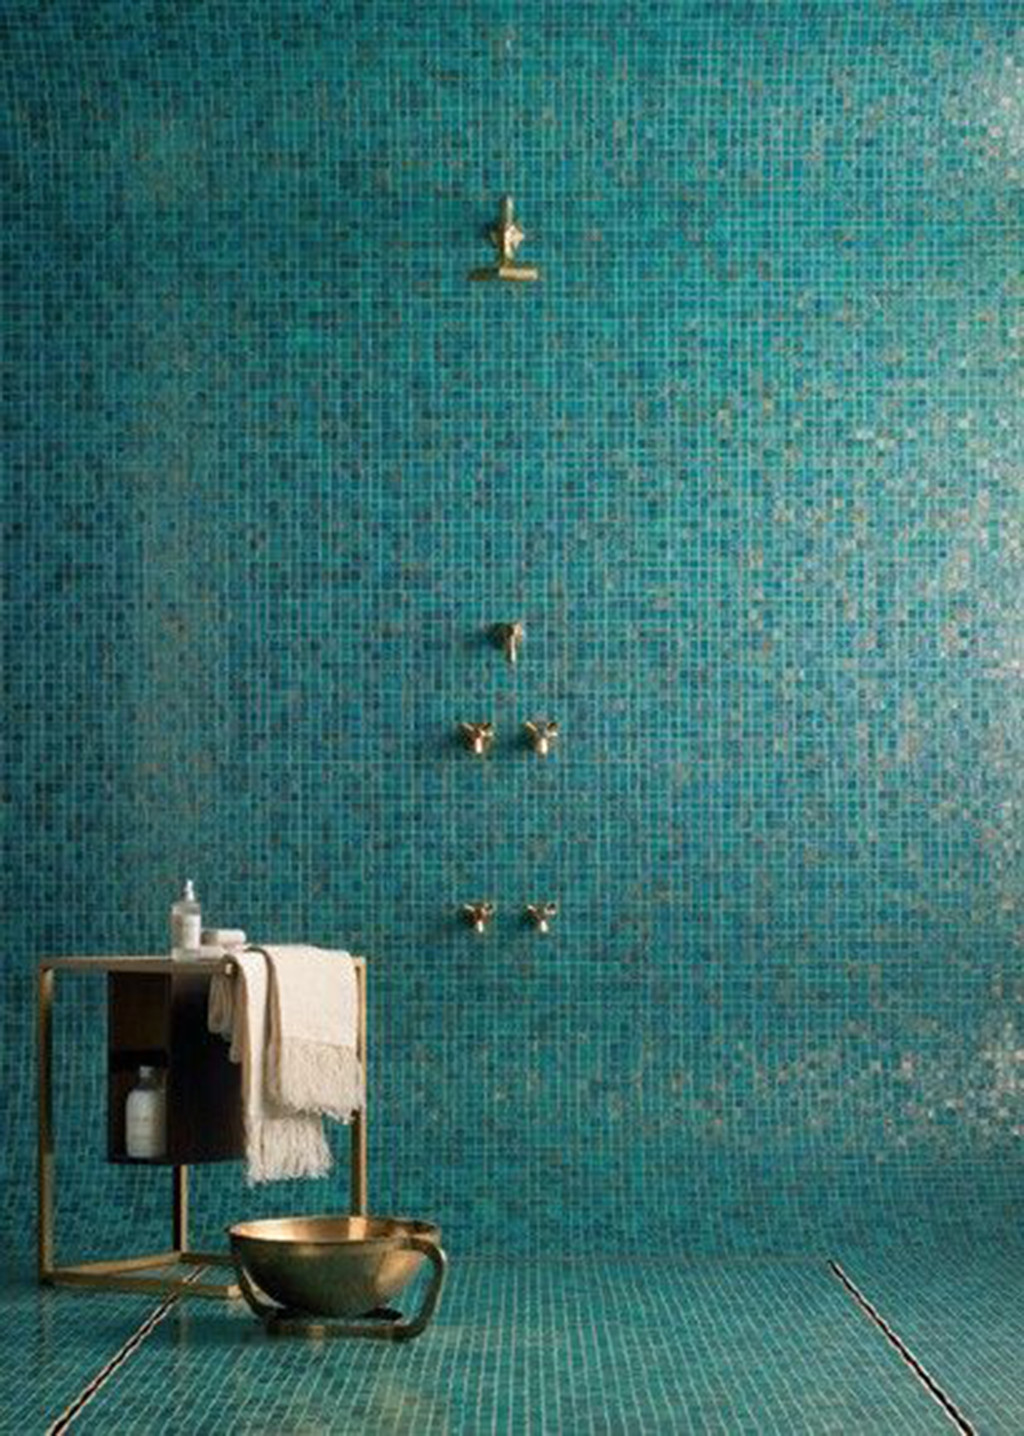 tegels-mozaiek-blauw-omg_2048x2048.jpg